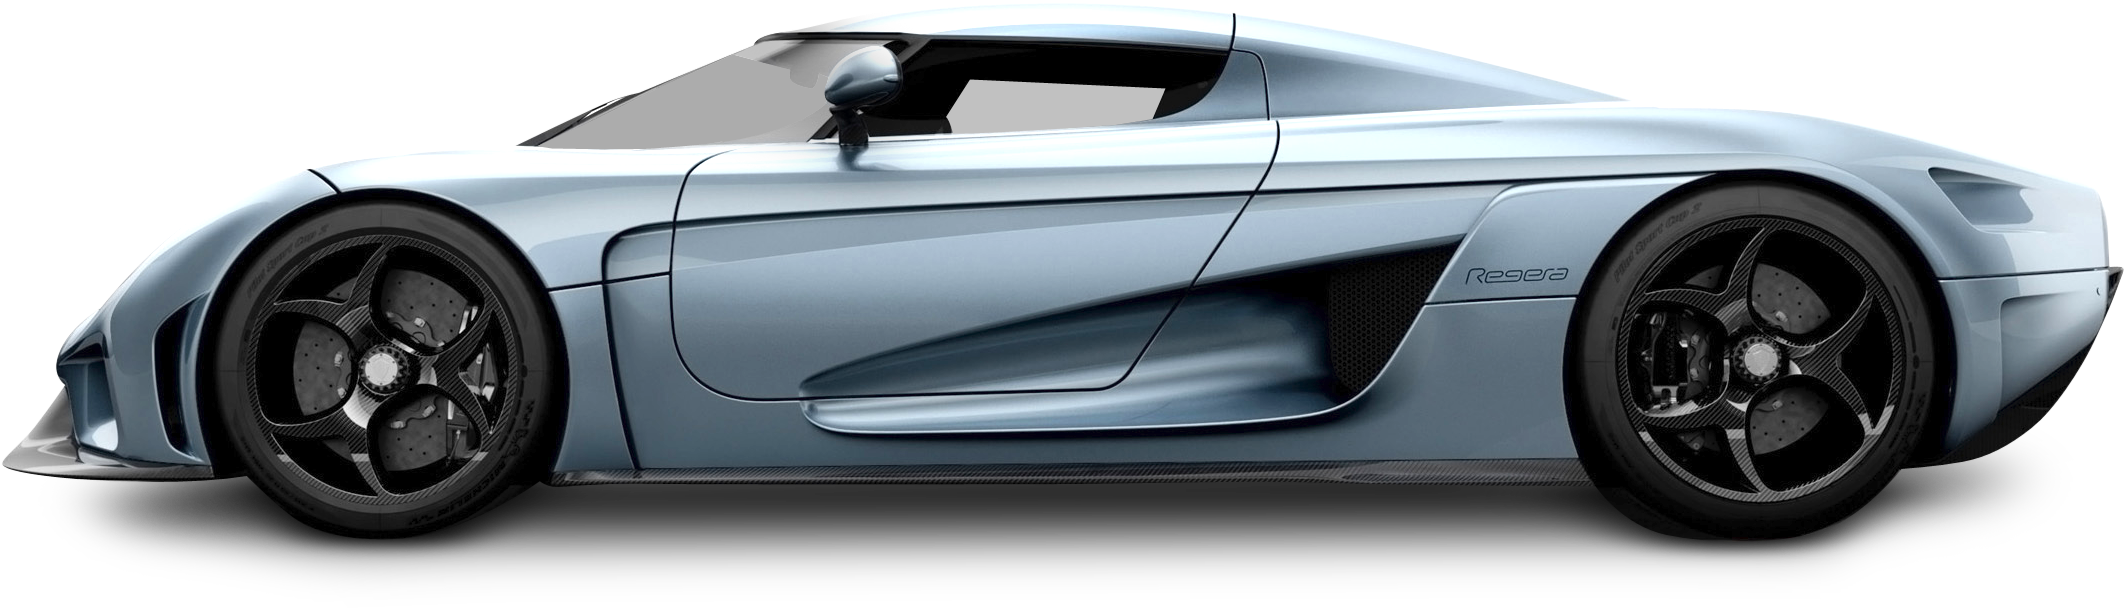 Koenigsegg Автомобиль PNG Image